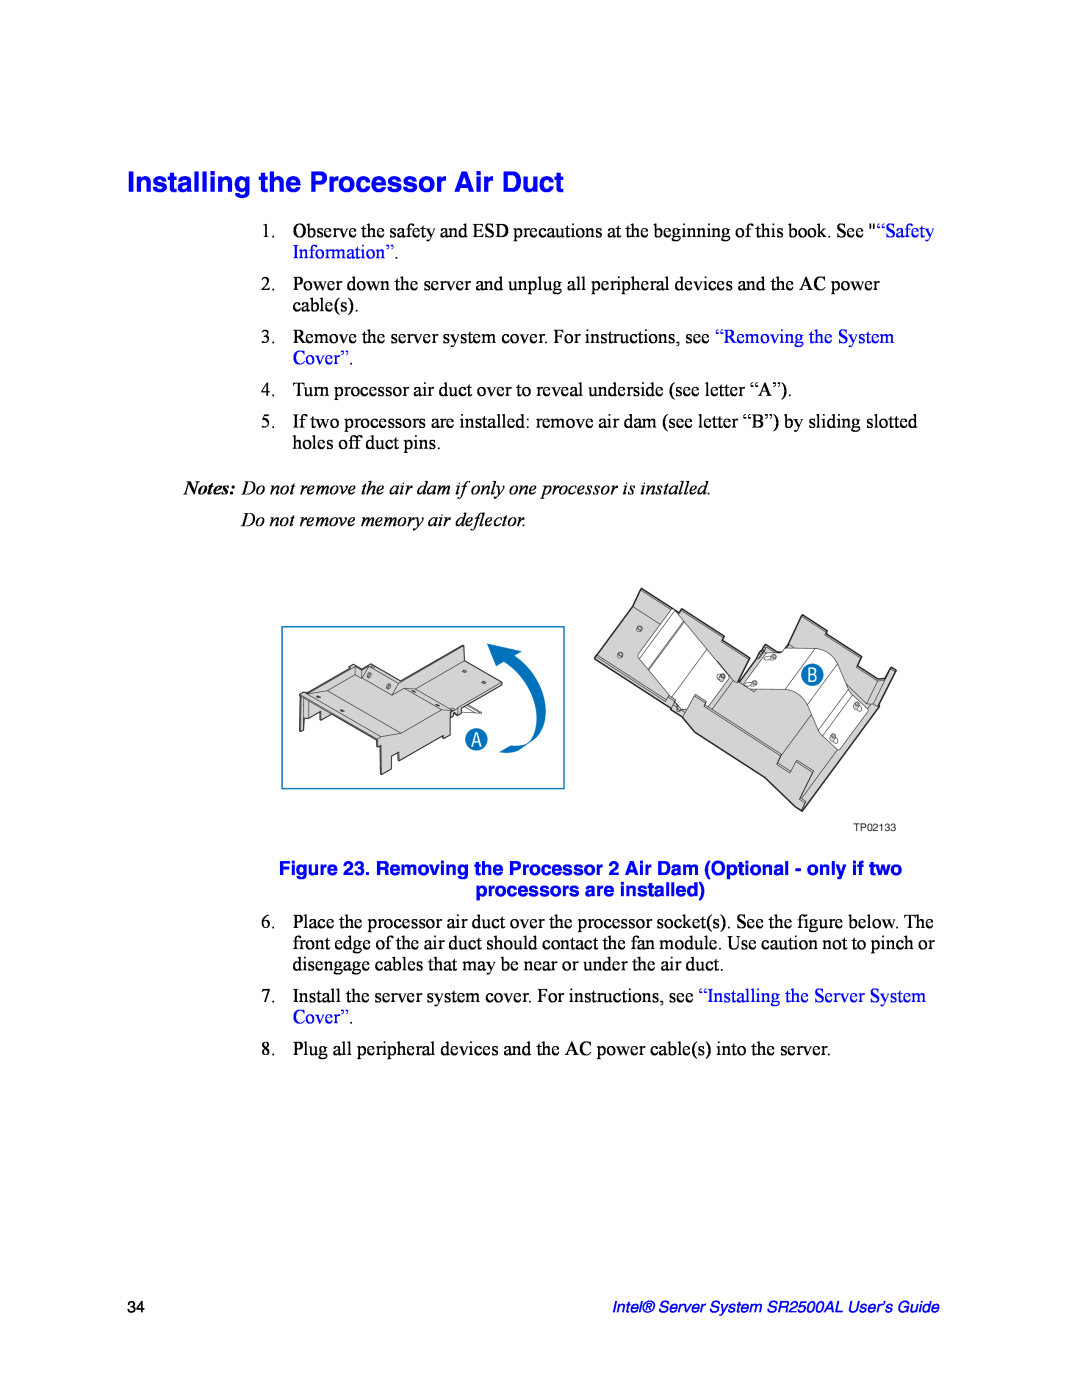 Intel SR2500AL manual Installing the Processor Air Duct, Removing the Processor 2 Air Dam Optional - only if two 